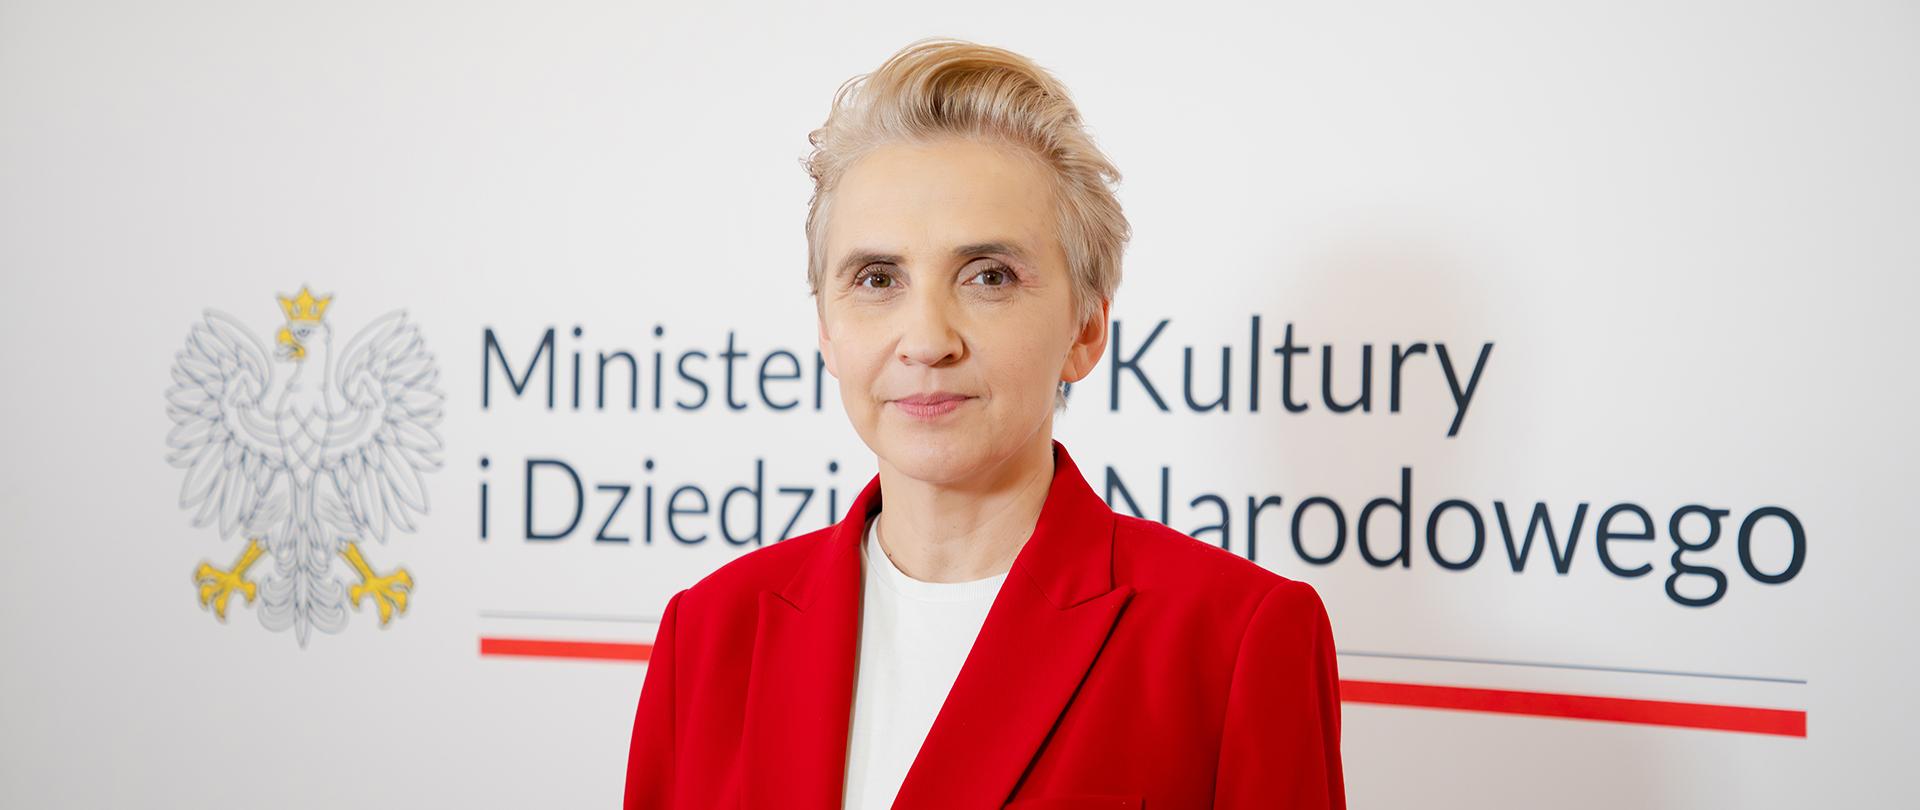 Joanna Scheuring-Wielgus - sekretarz stanu, fot. Danuta Matloch